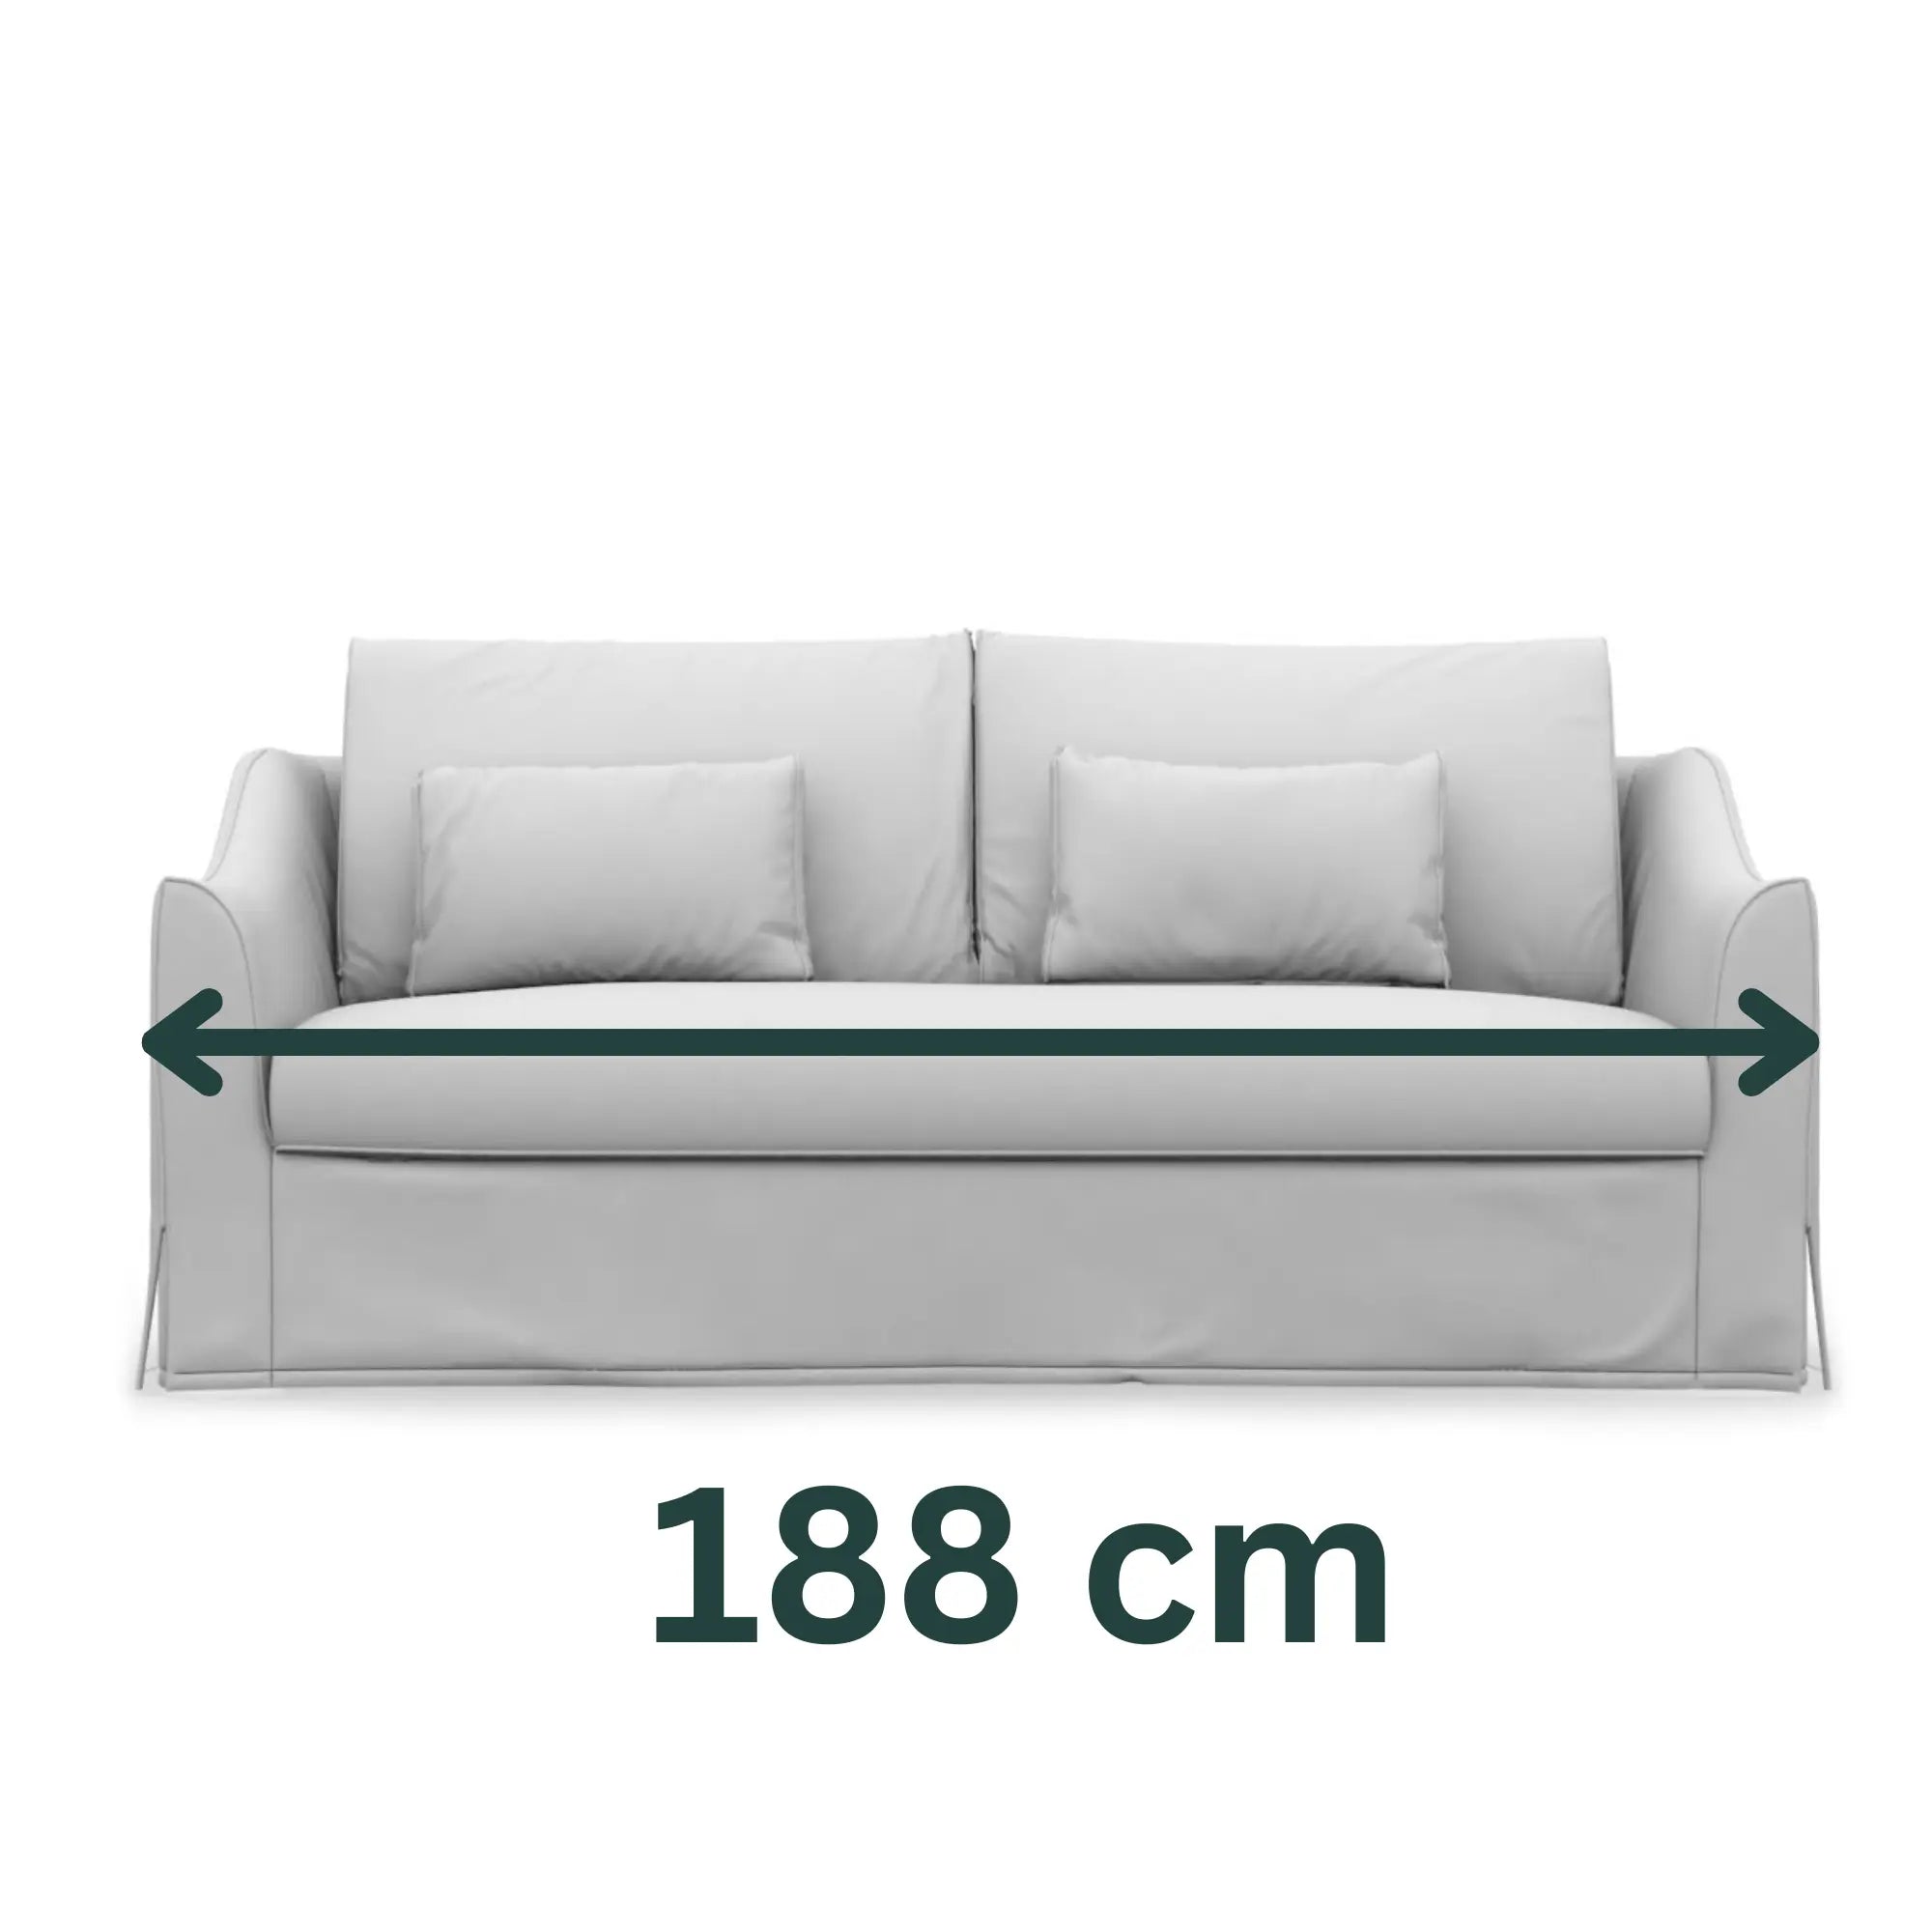 FÄRLÖV 2-Seat IKEA Sofa Bed Cover US CA Version